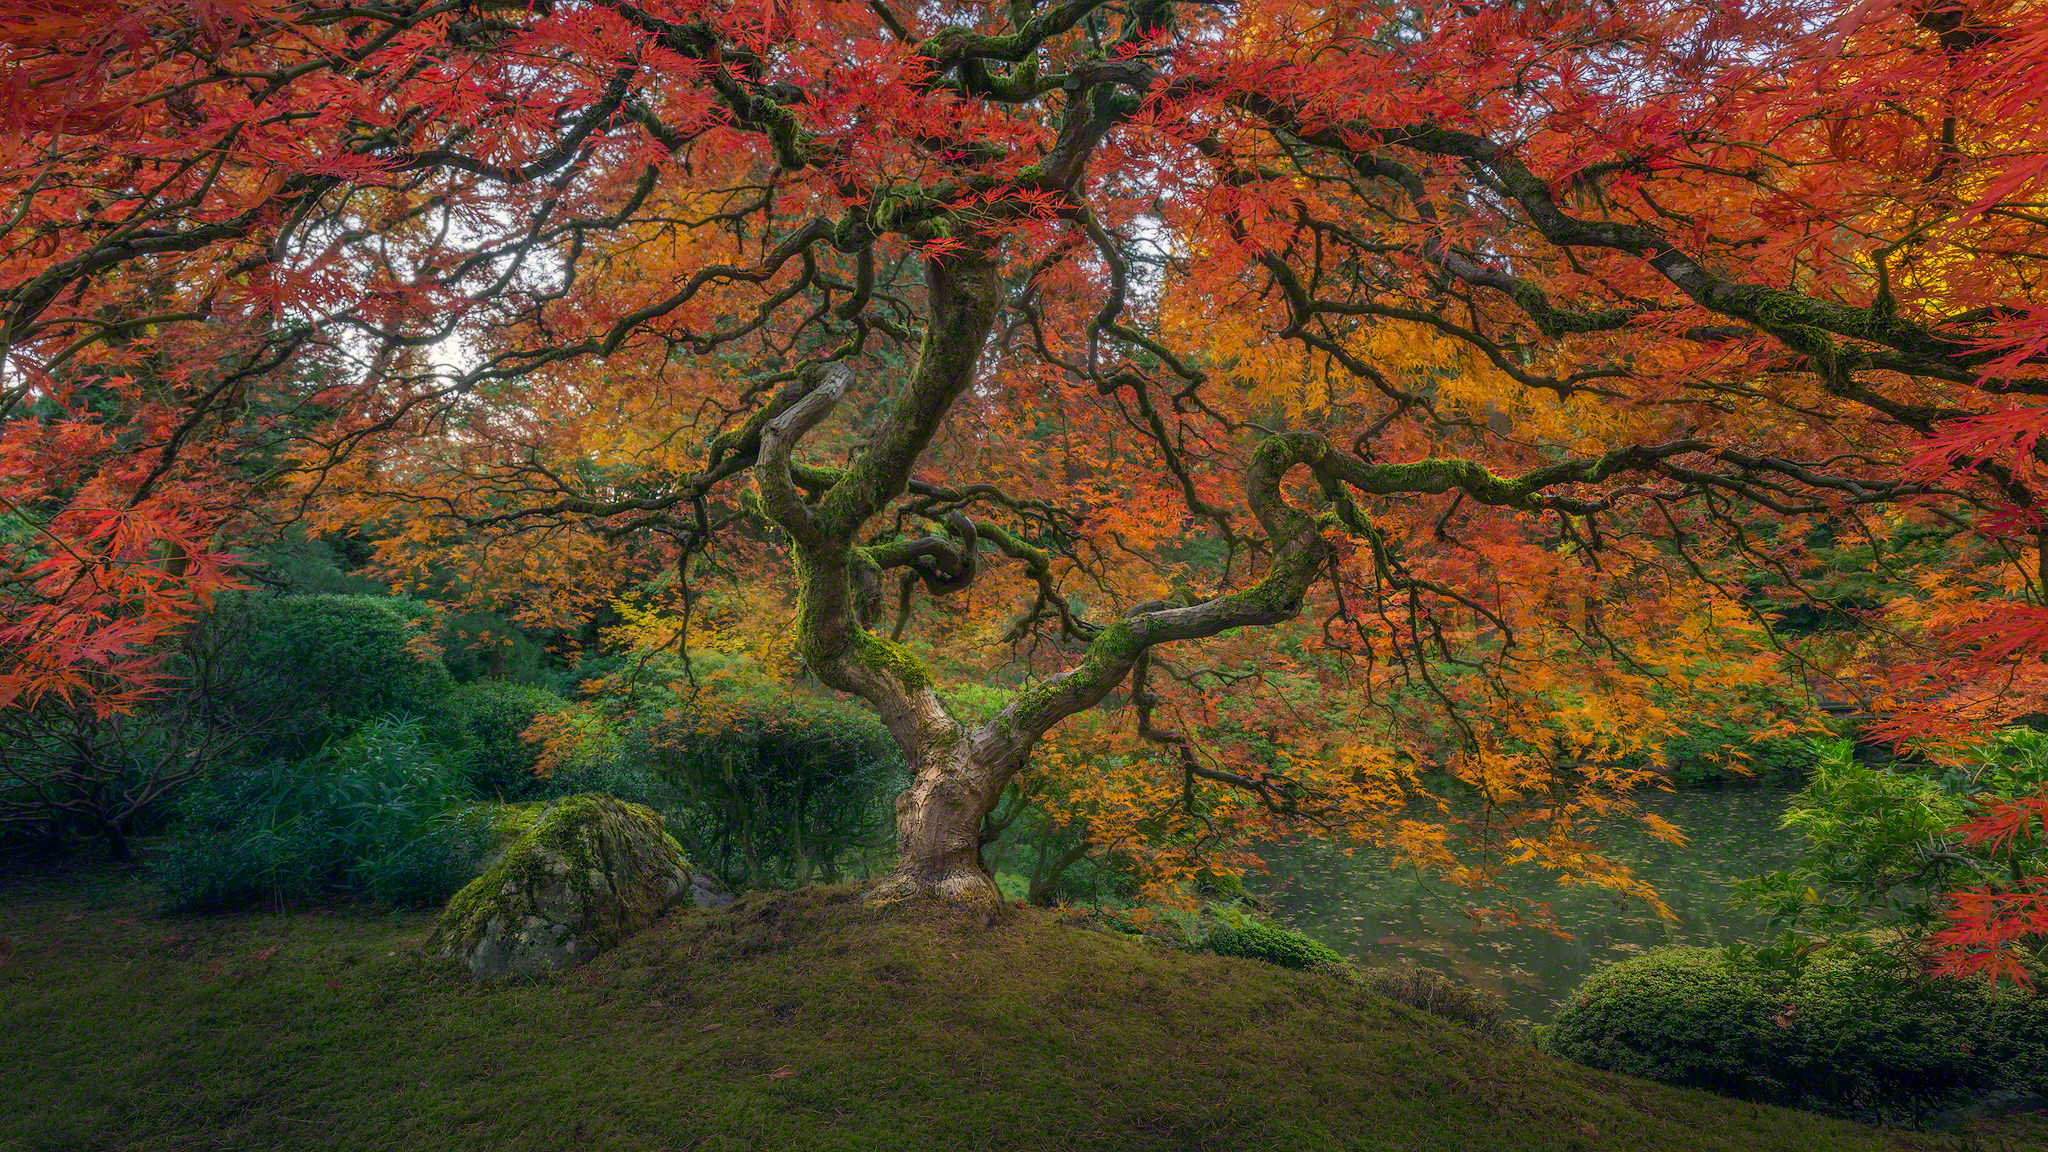 General 2048x1152 Portland trees fall colorful plants hills moss landscape national park